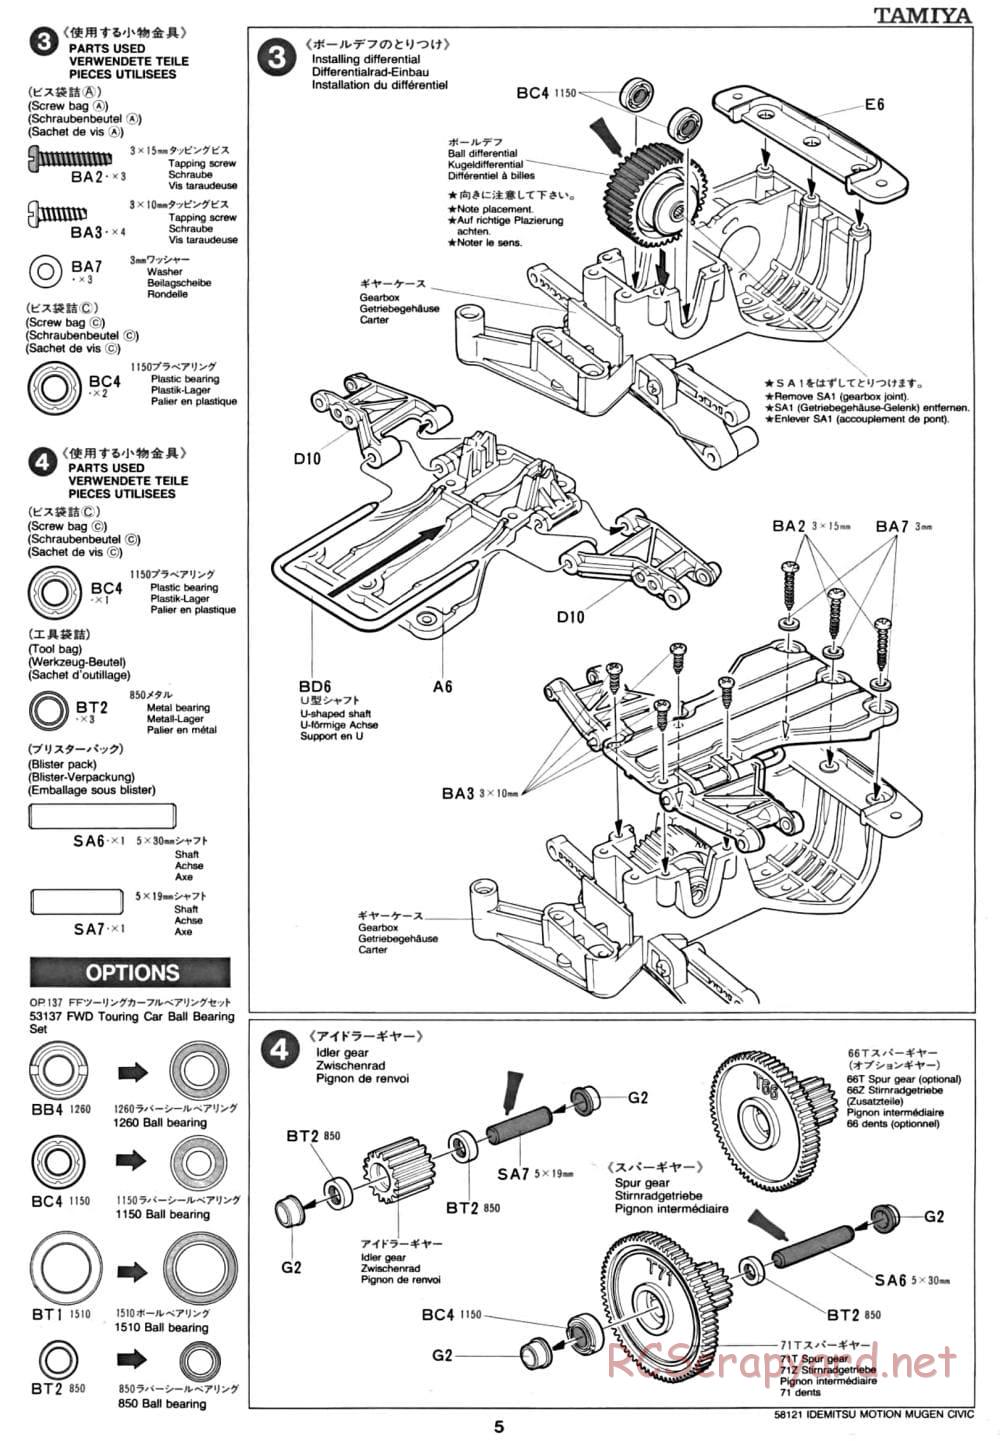 Tamiya - Idemitsu Motion Mugen Civic - FF-01 Chassis - Manual - Page 5